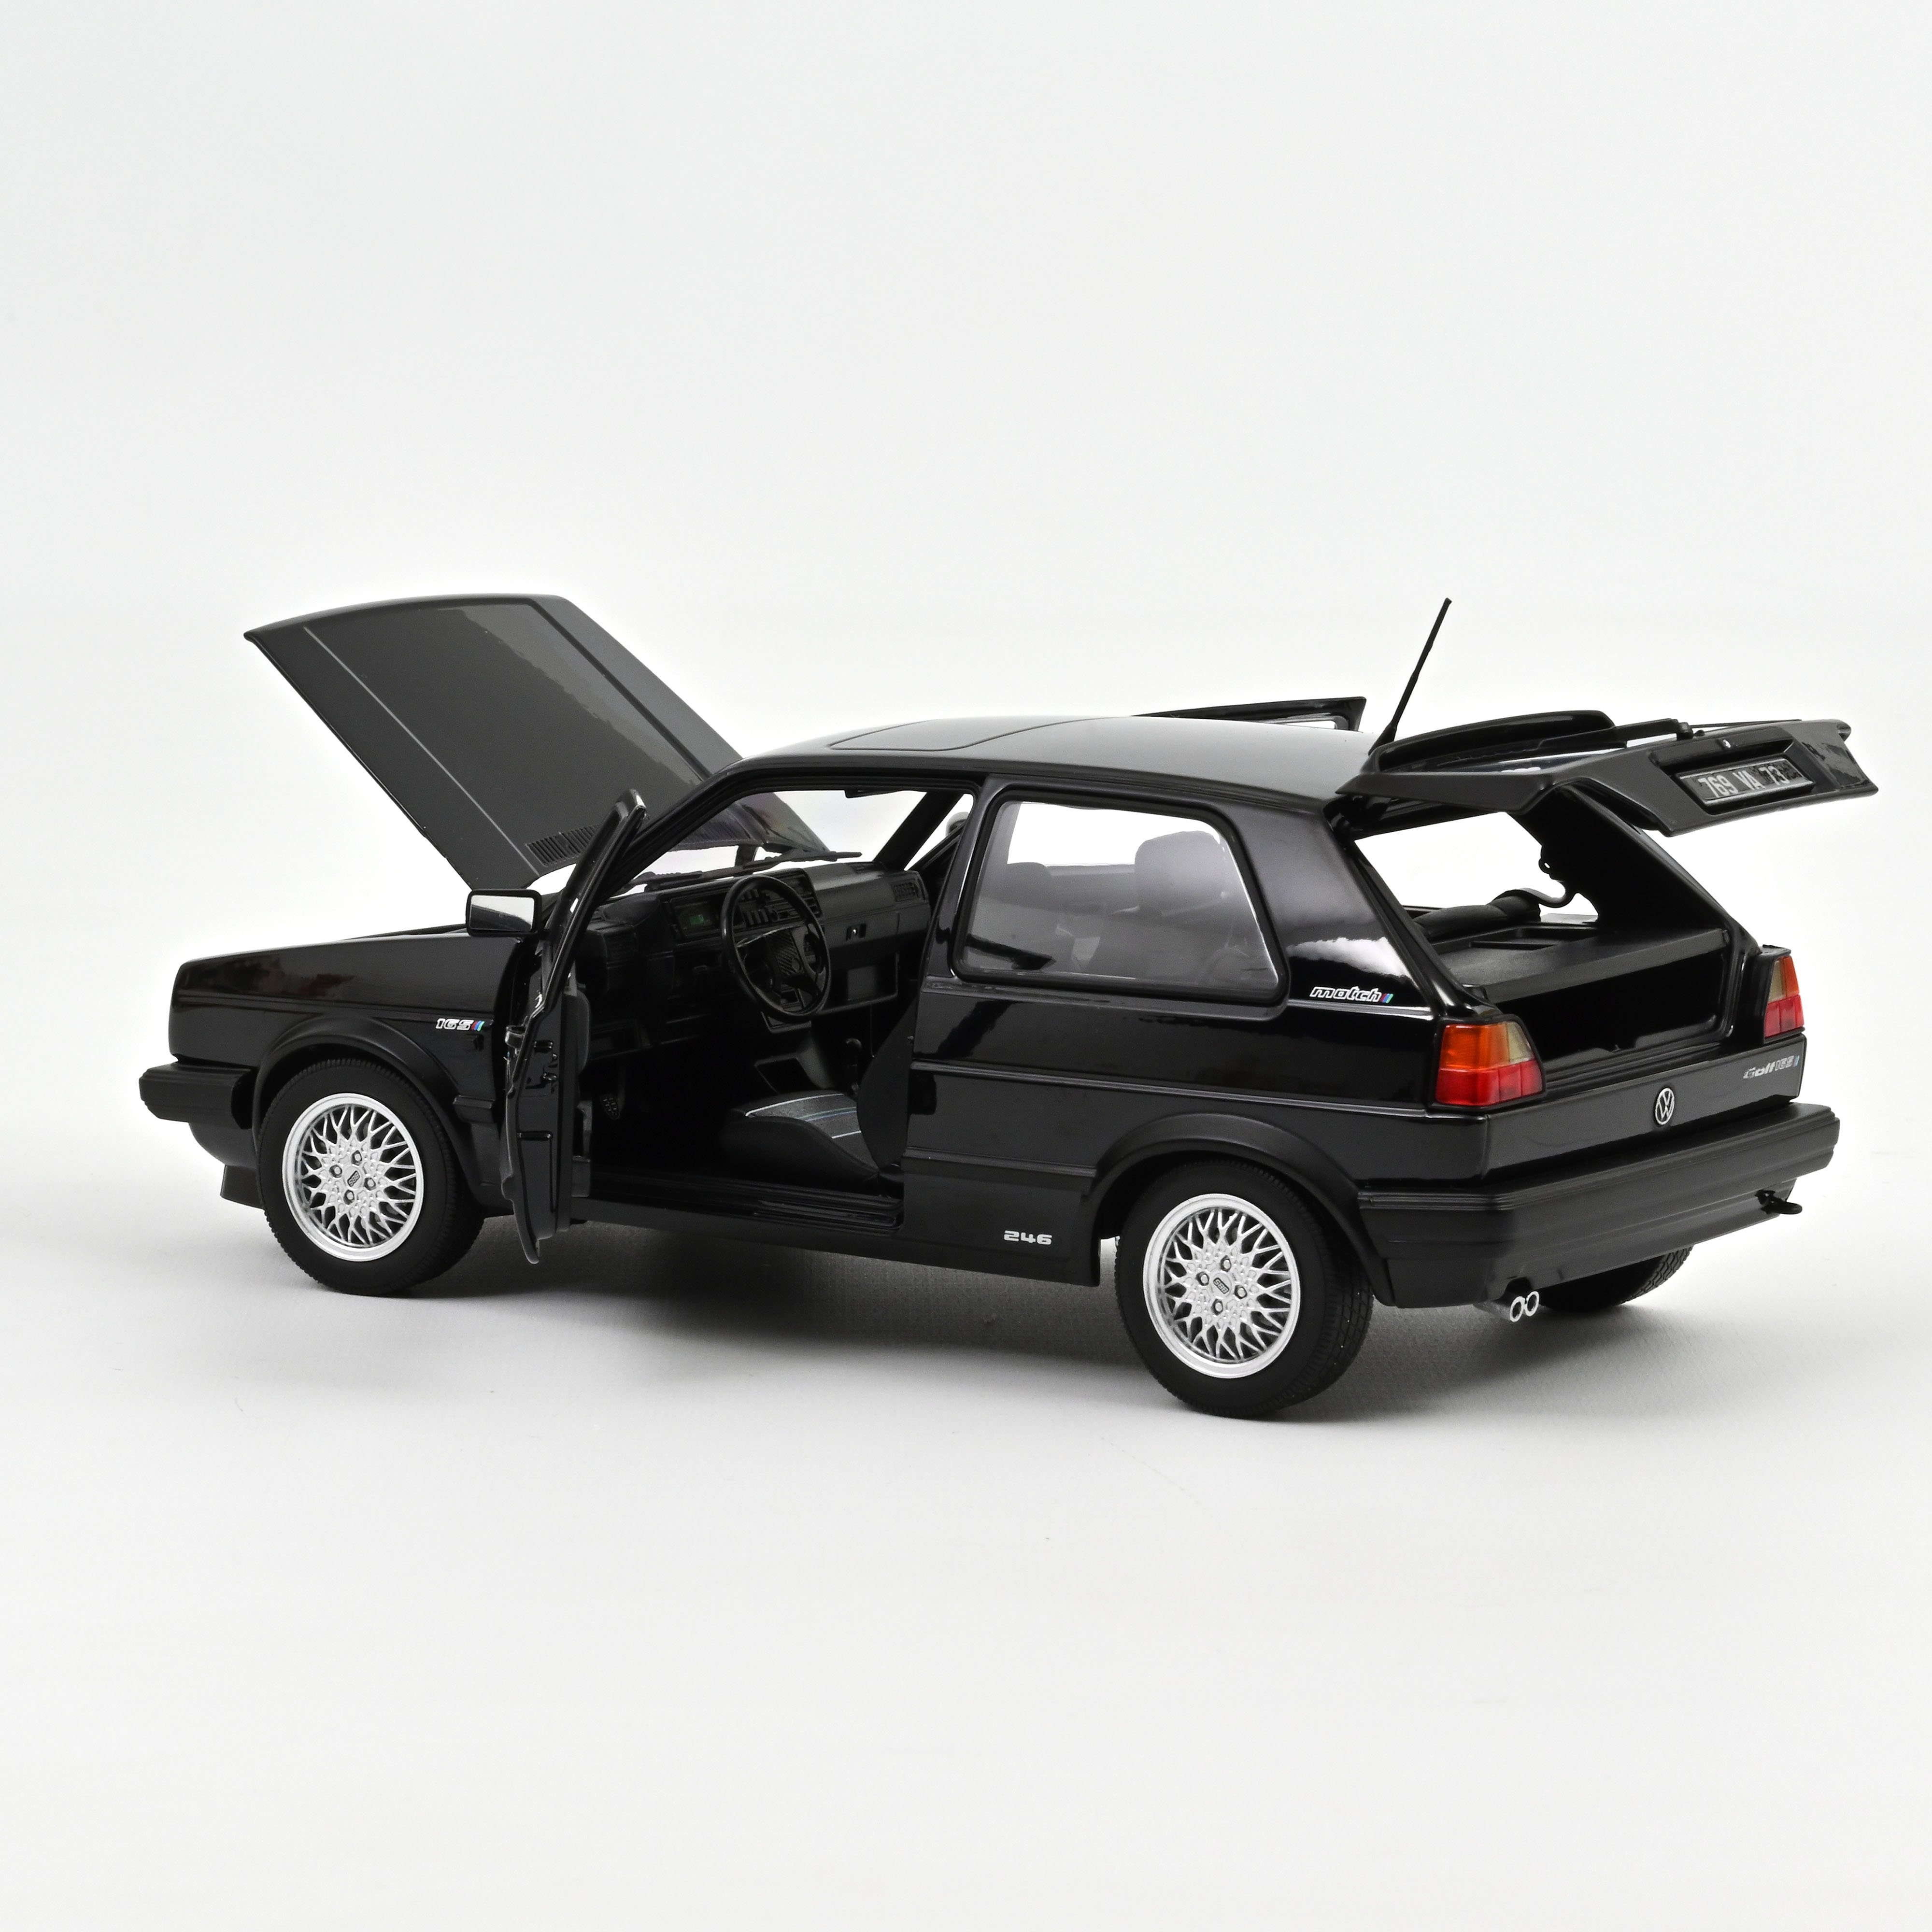 VW Golf GTI Match´89 1:18 black metallic